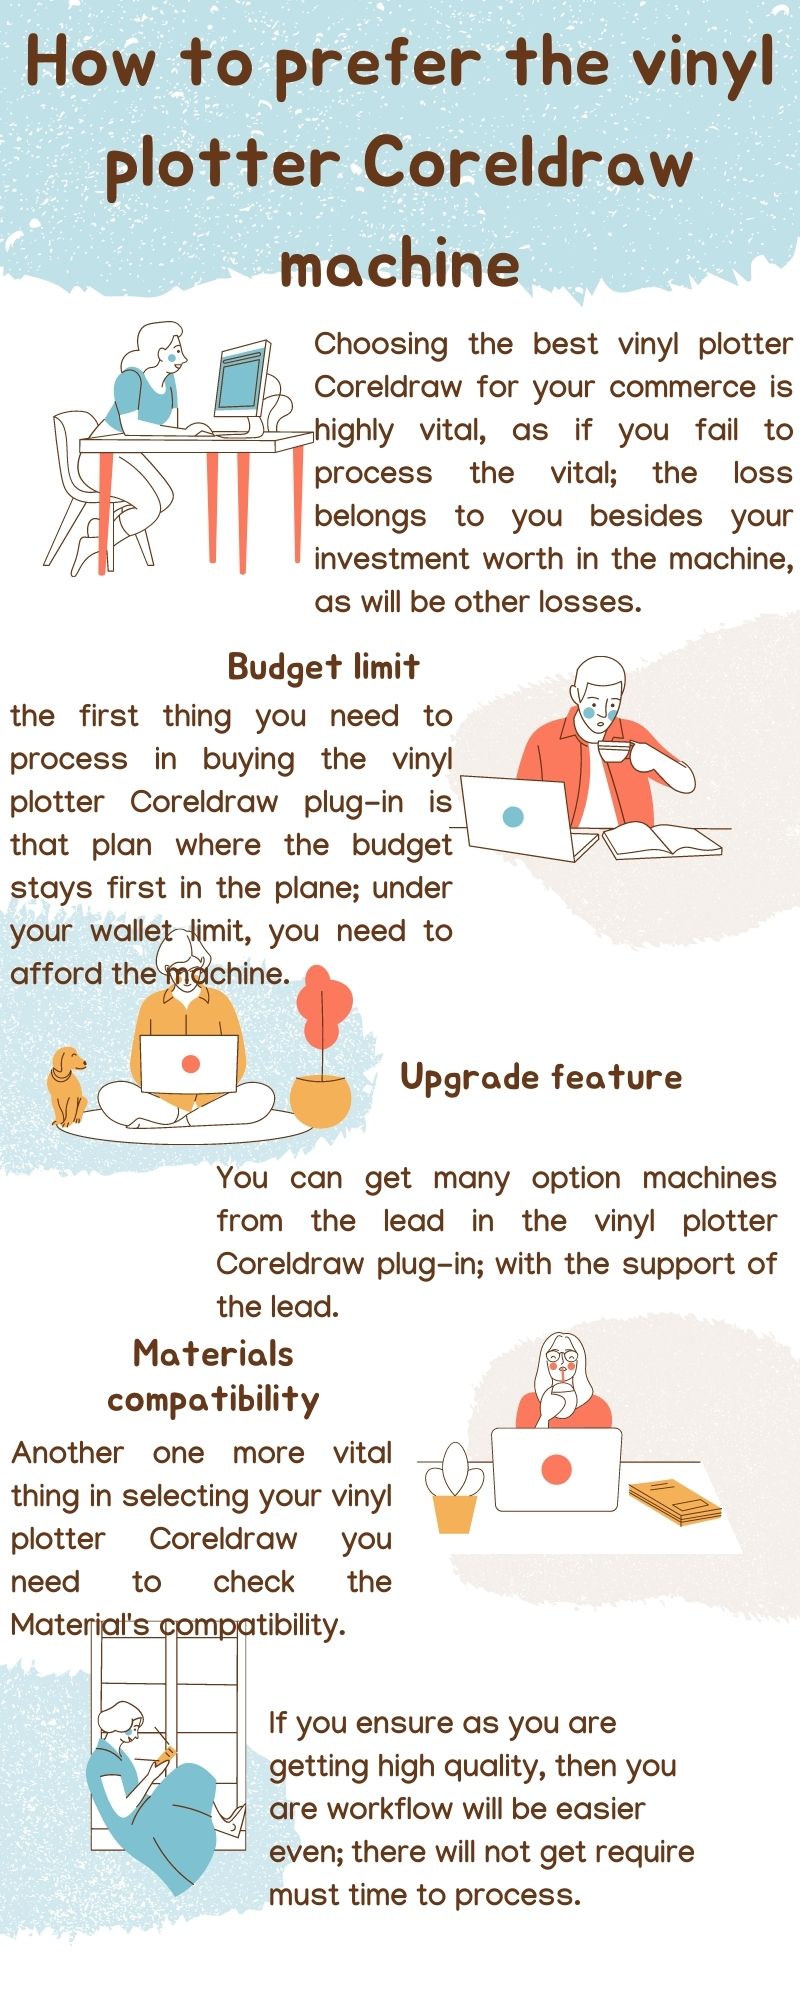 How to prefer the vinyl plotter Coreldraw machine.jpg  by Redsailtechnology